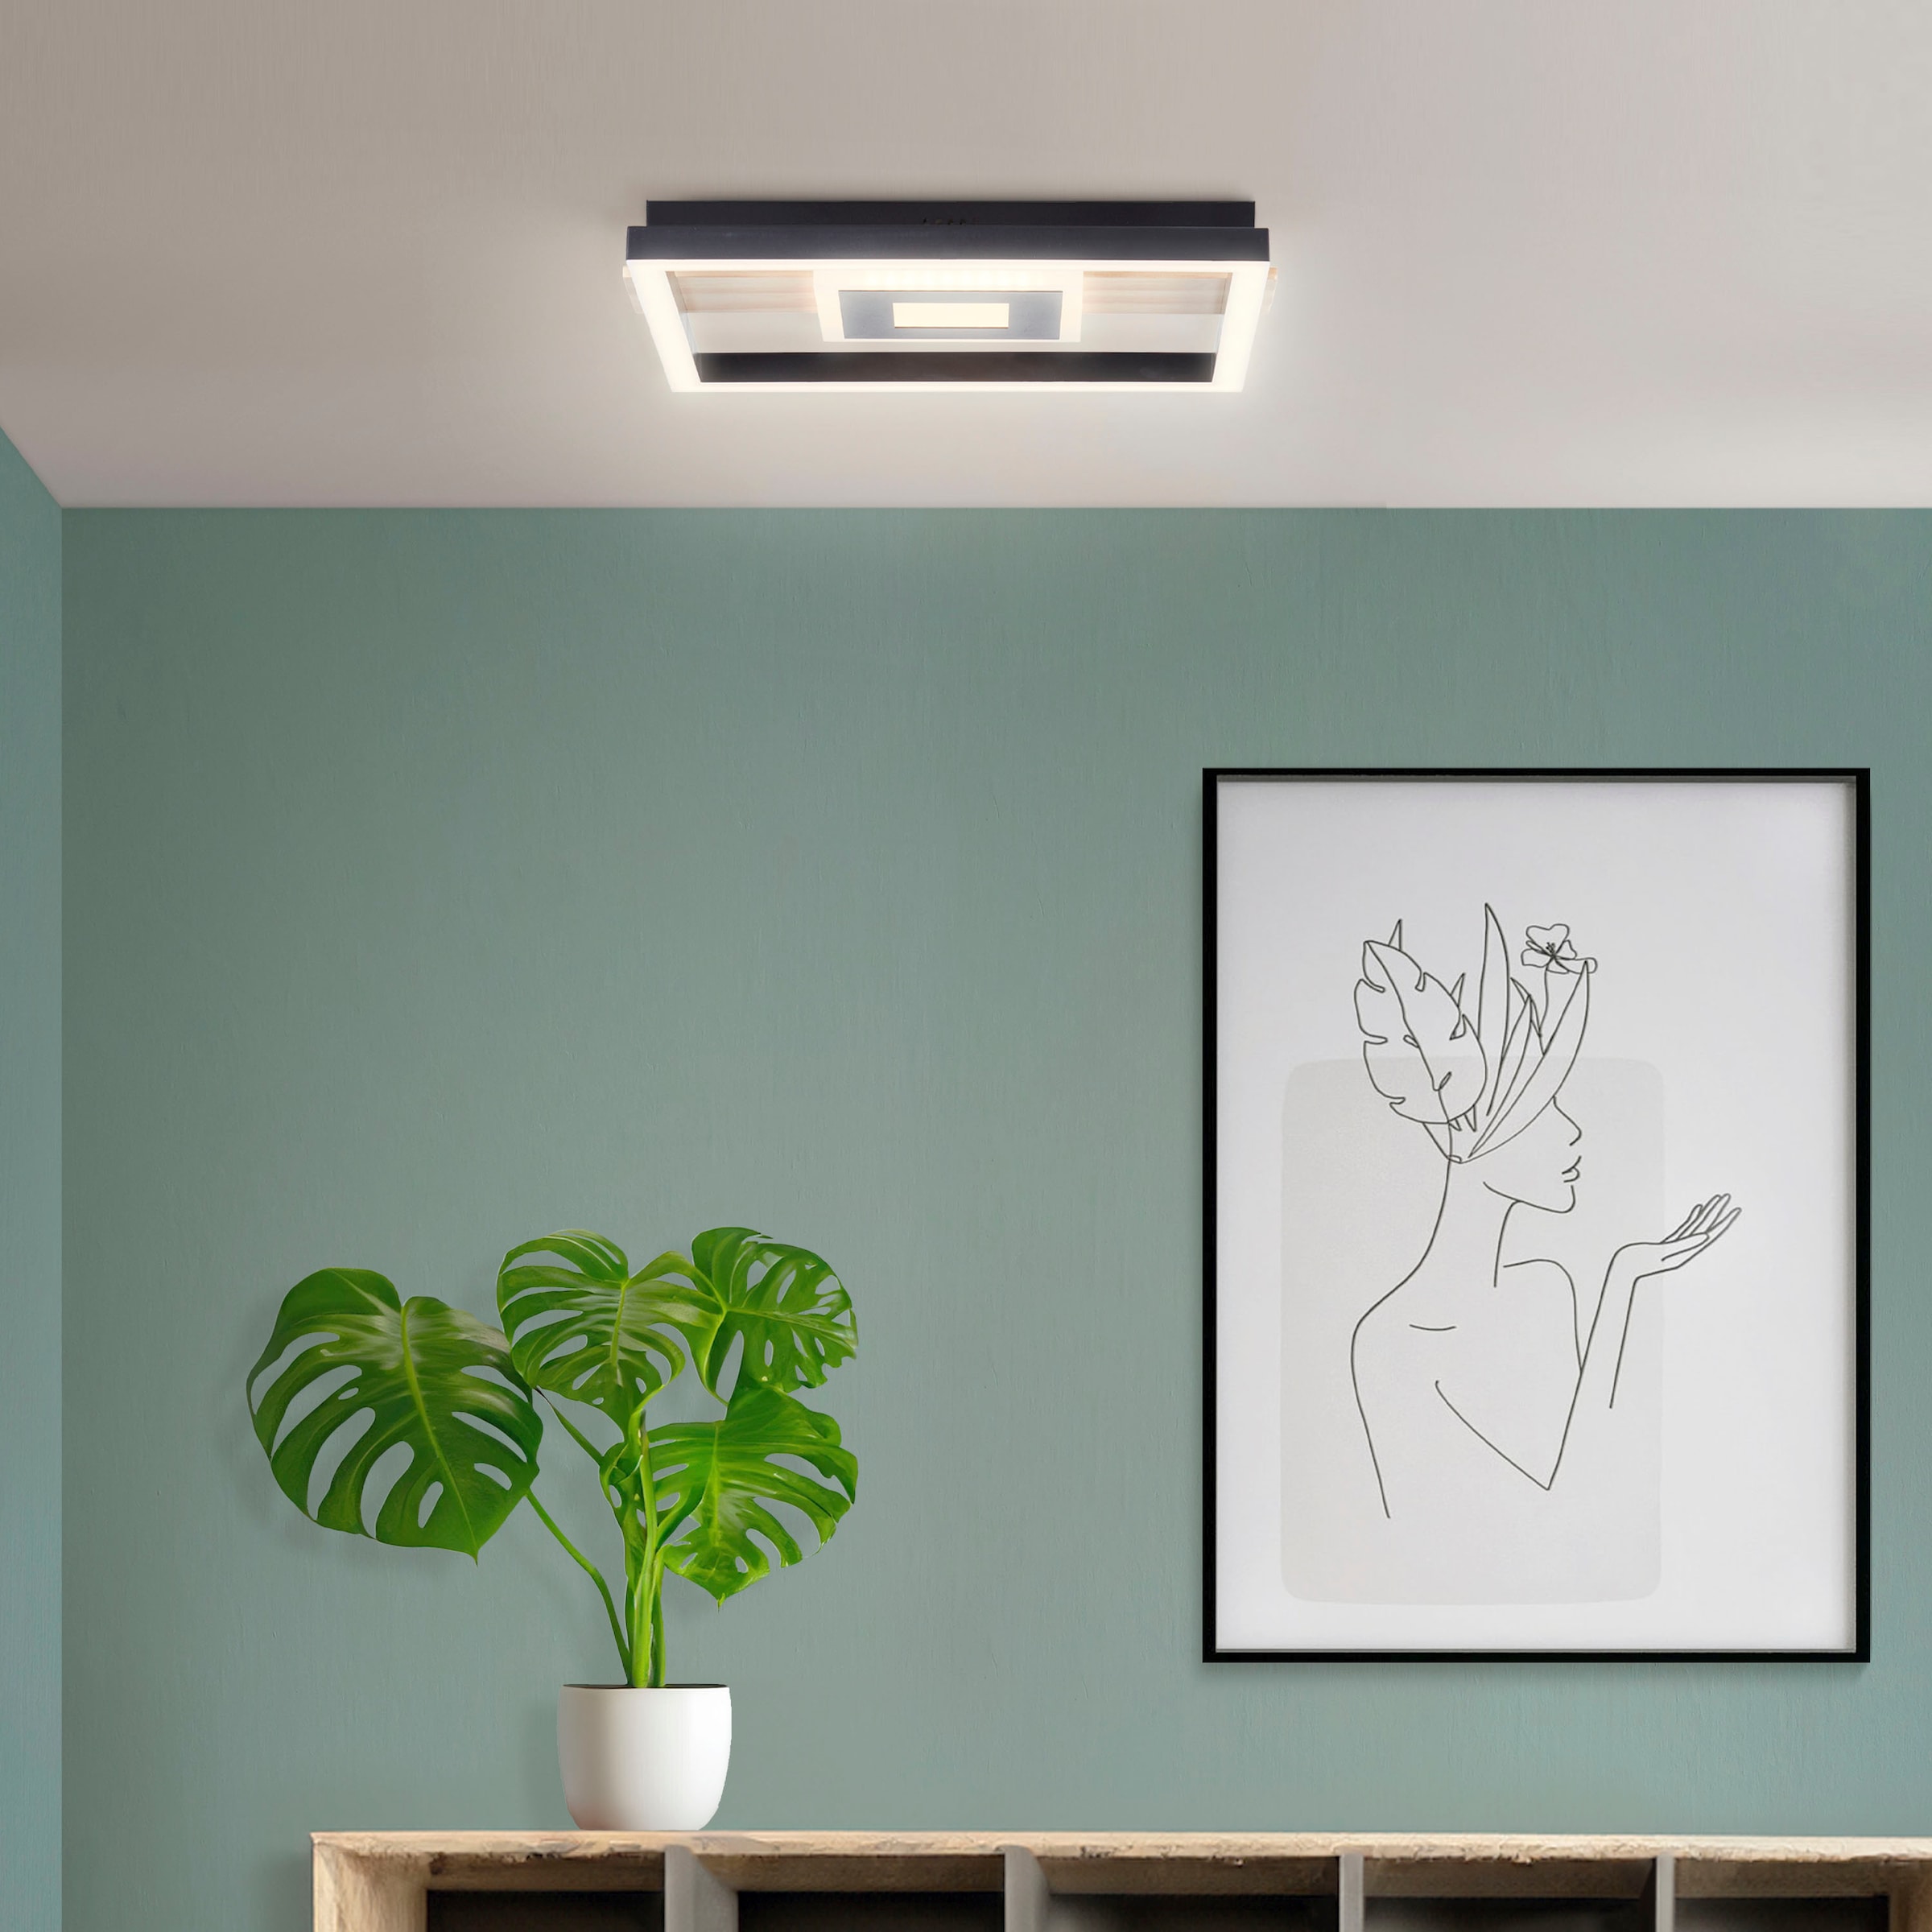 my home LED Deckenleuchte »Lysann Deckenlampe«, Leuchtmittel LED-Board | LED fest integriert, 30 x 28 cm, 24 W, 2600 lm, 3000 K, Holz/Metall, braun/schwarz